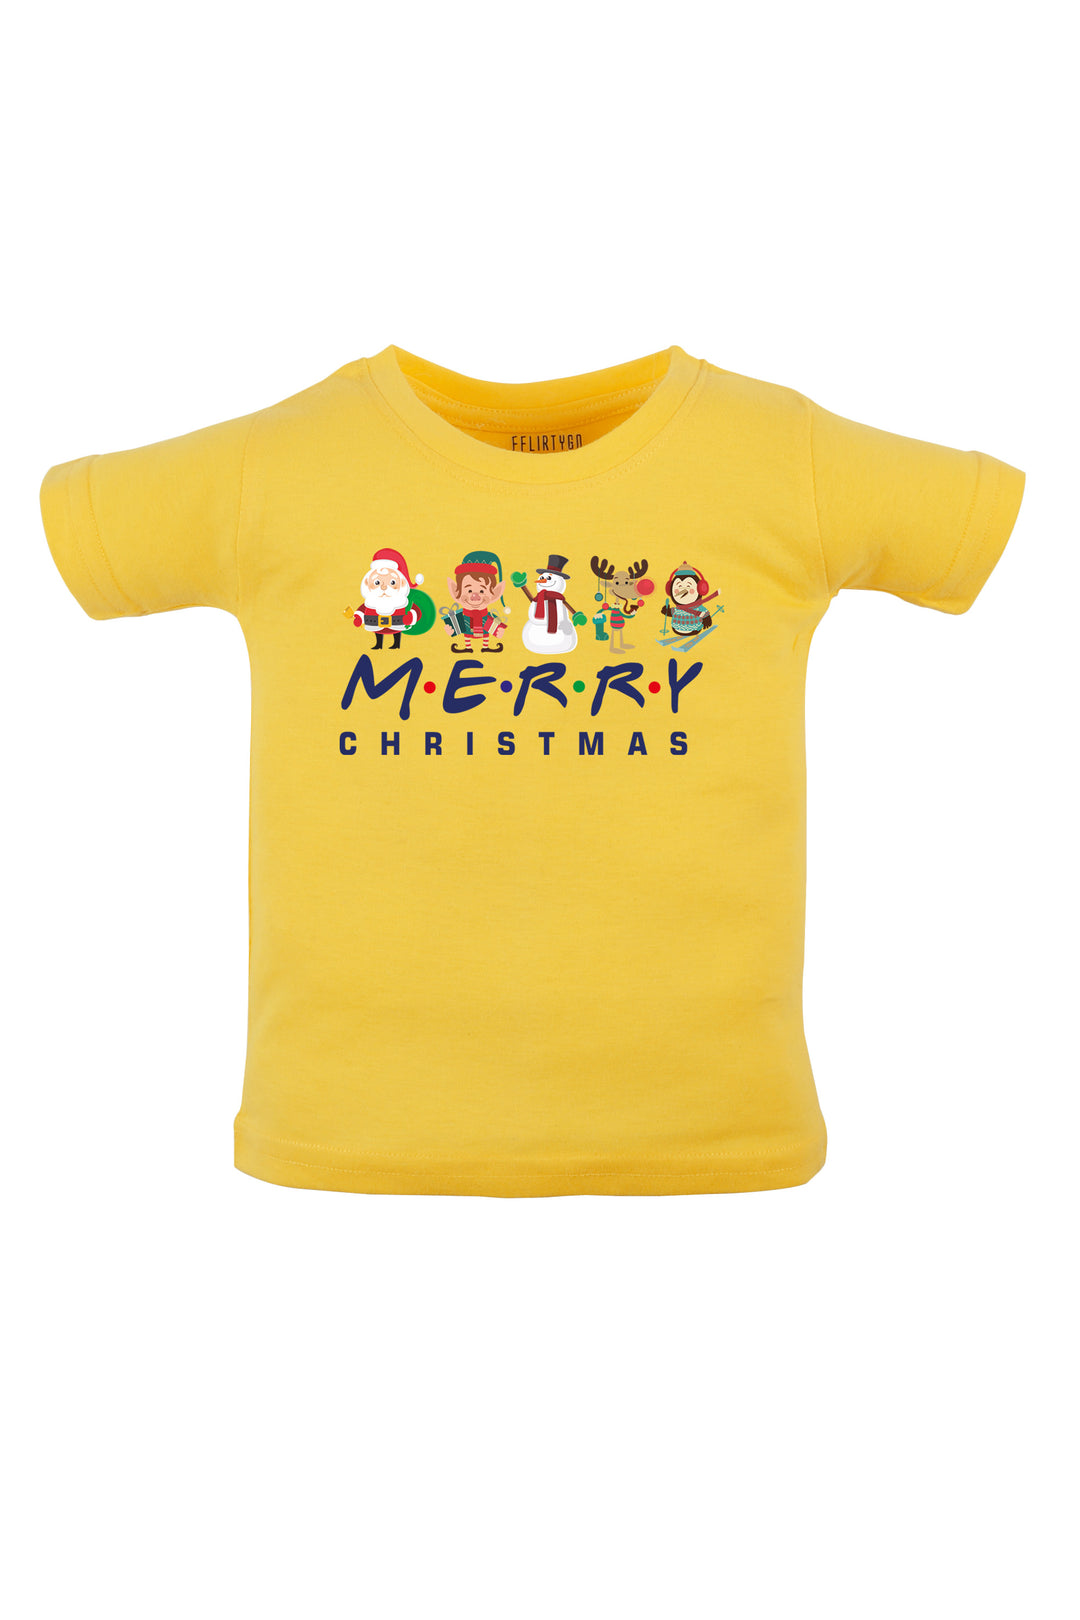 Merry Christmas Kids T Shirt